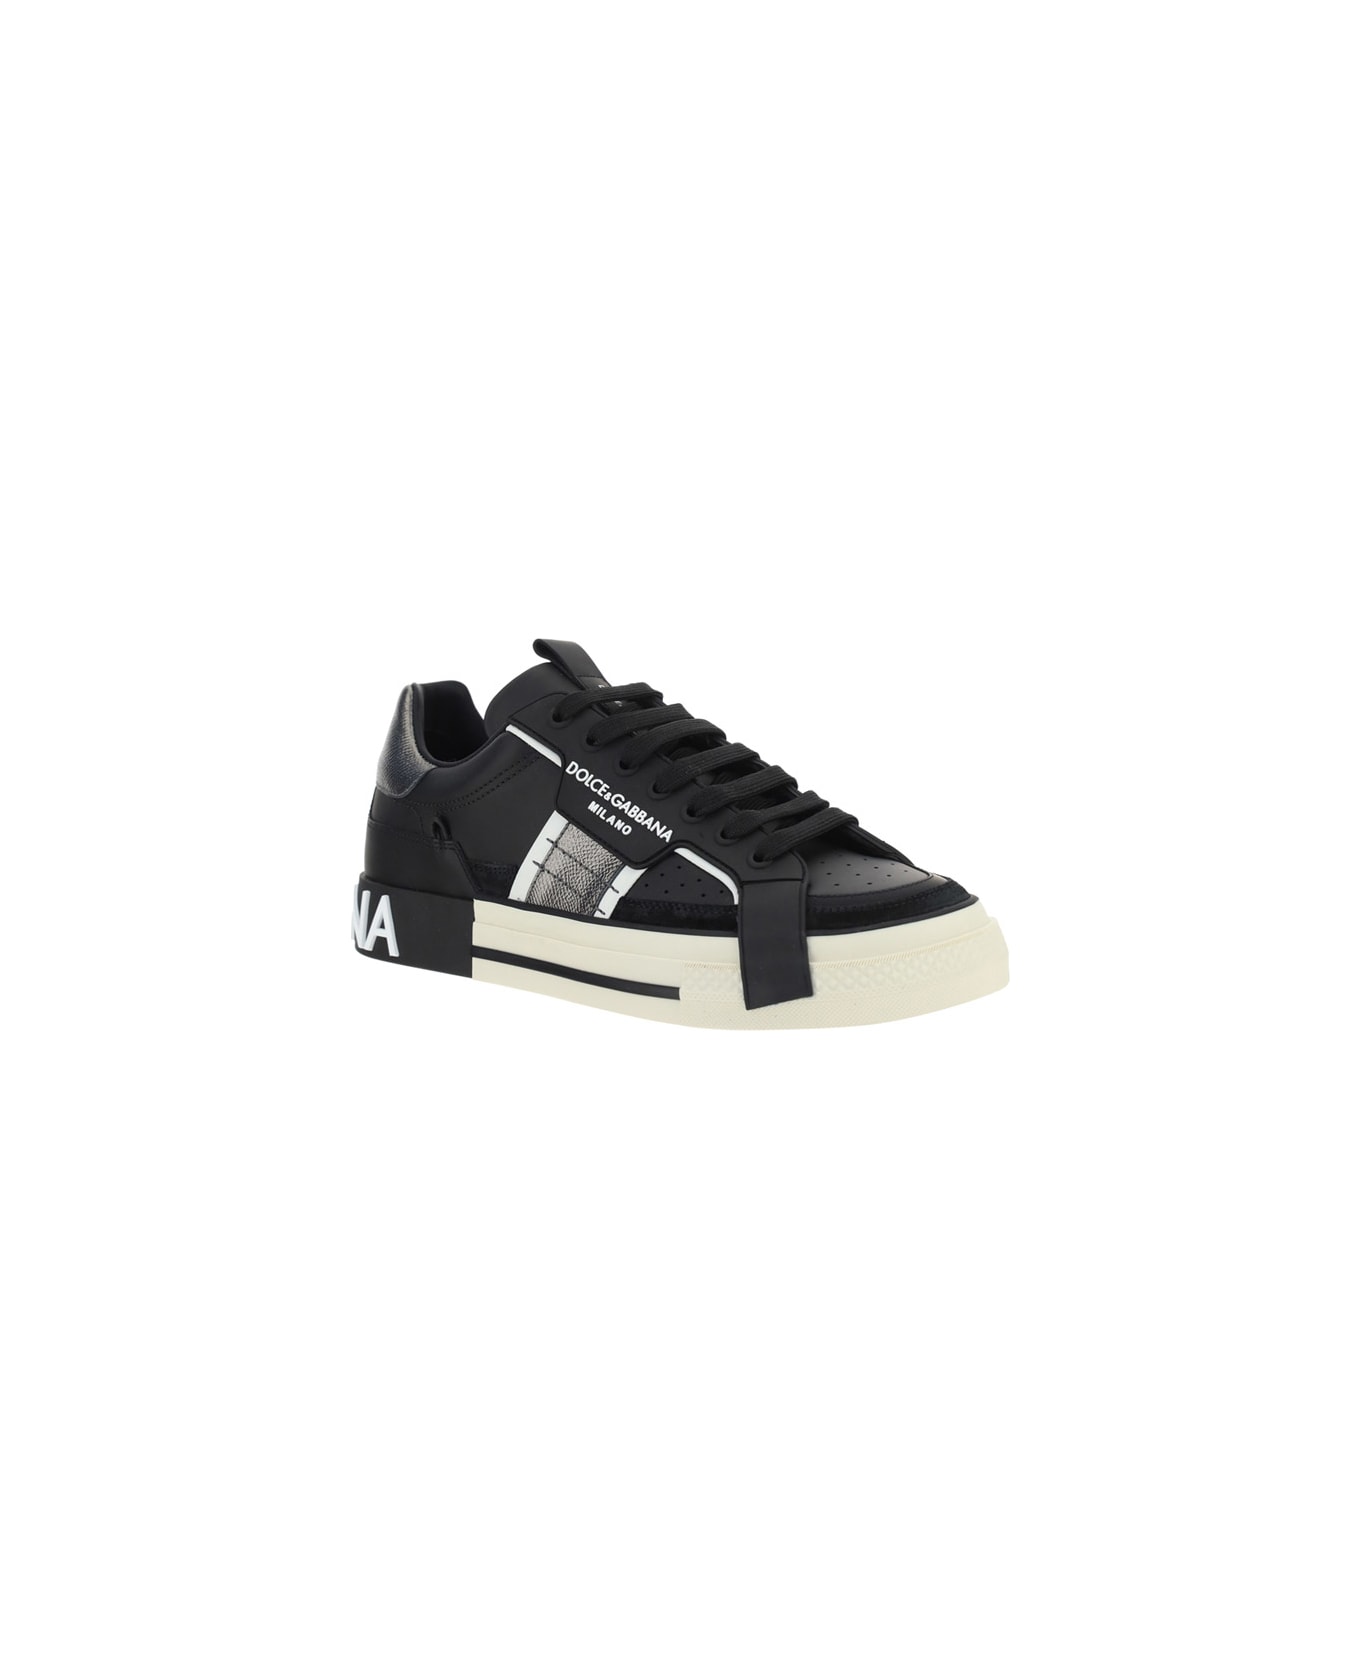 Dolce & Gabbana Custom 2.0 Sneakers - Nero/argento